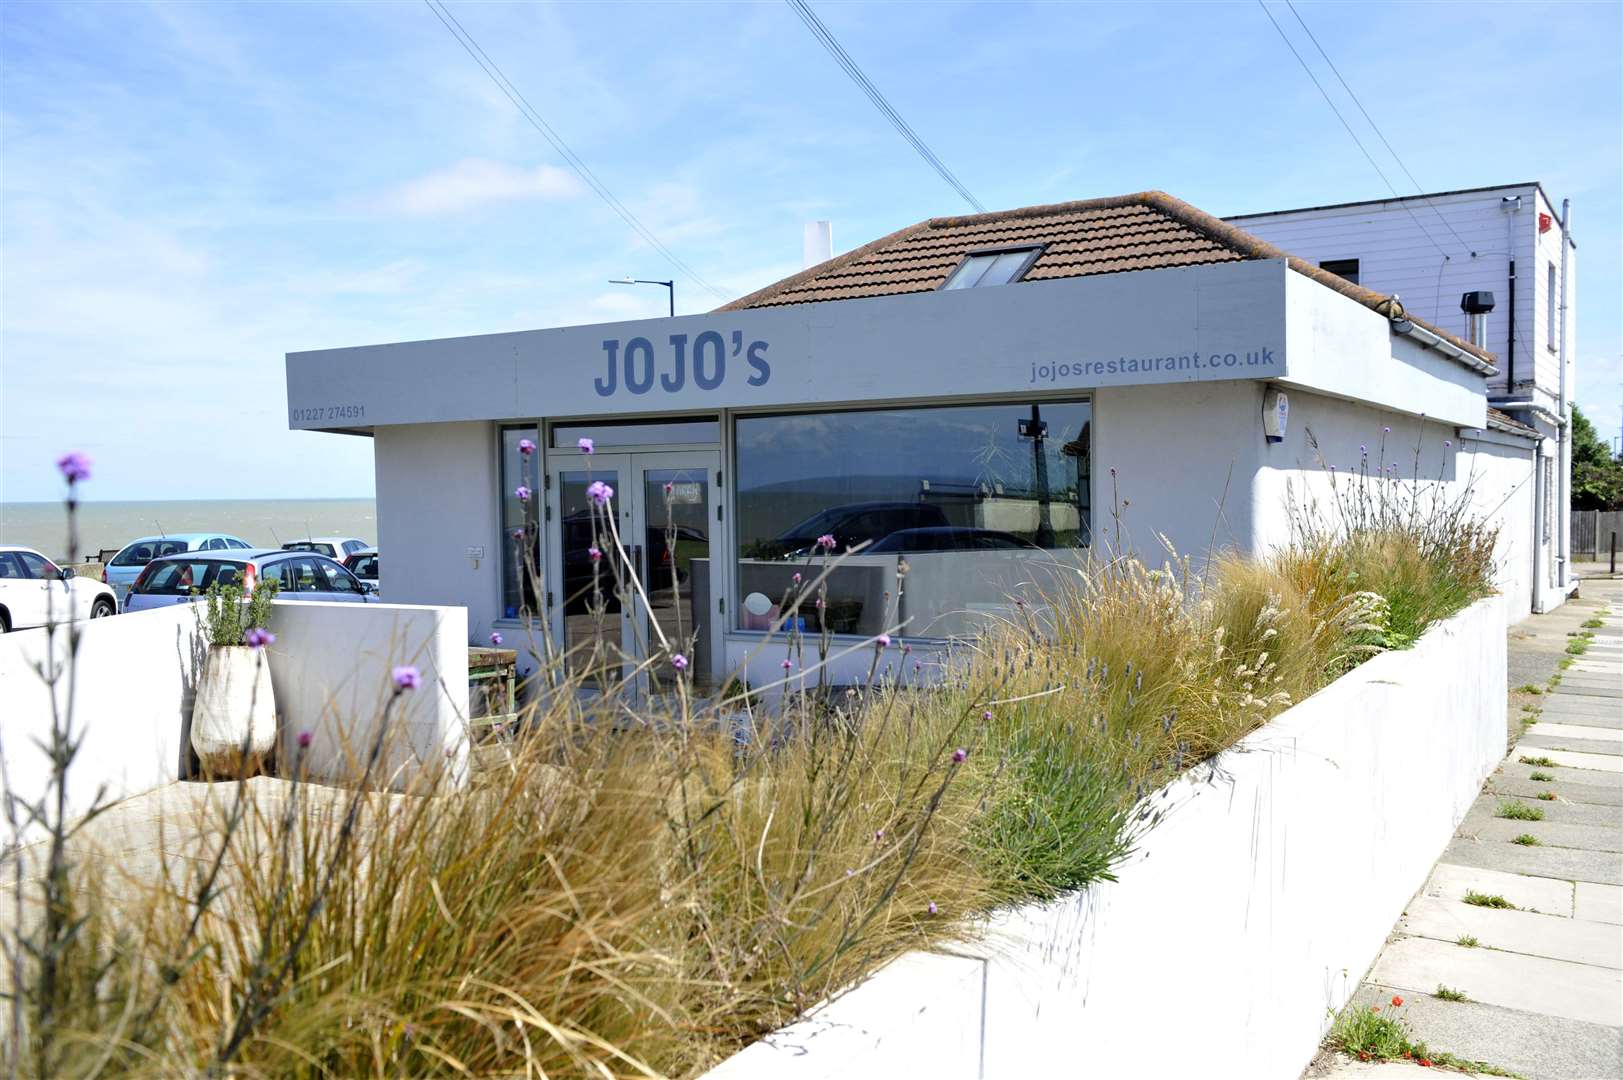 JoJo's has made the top 10 list of coastal diners